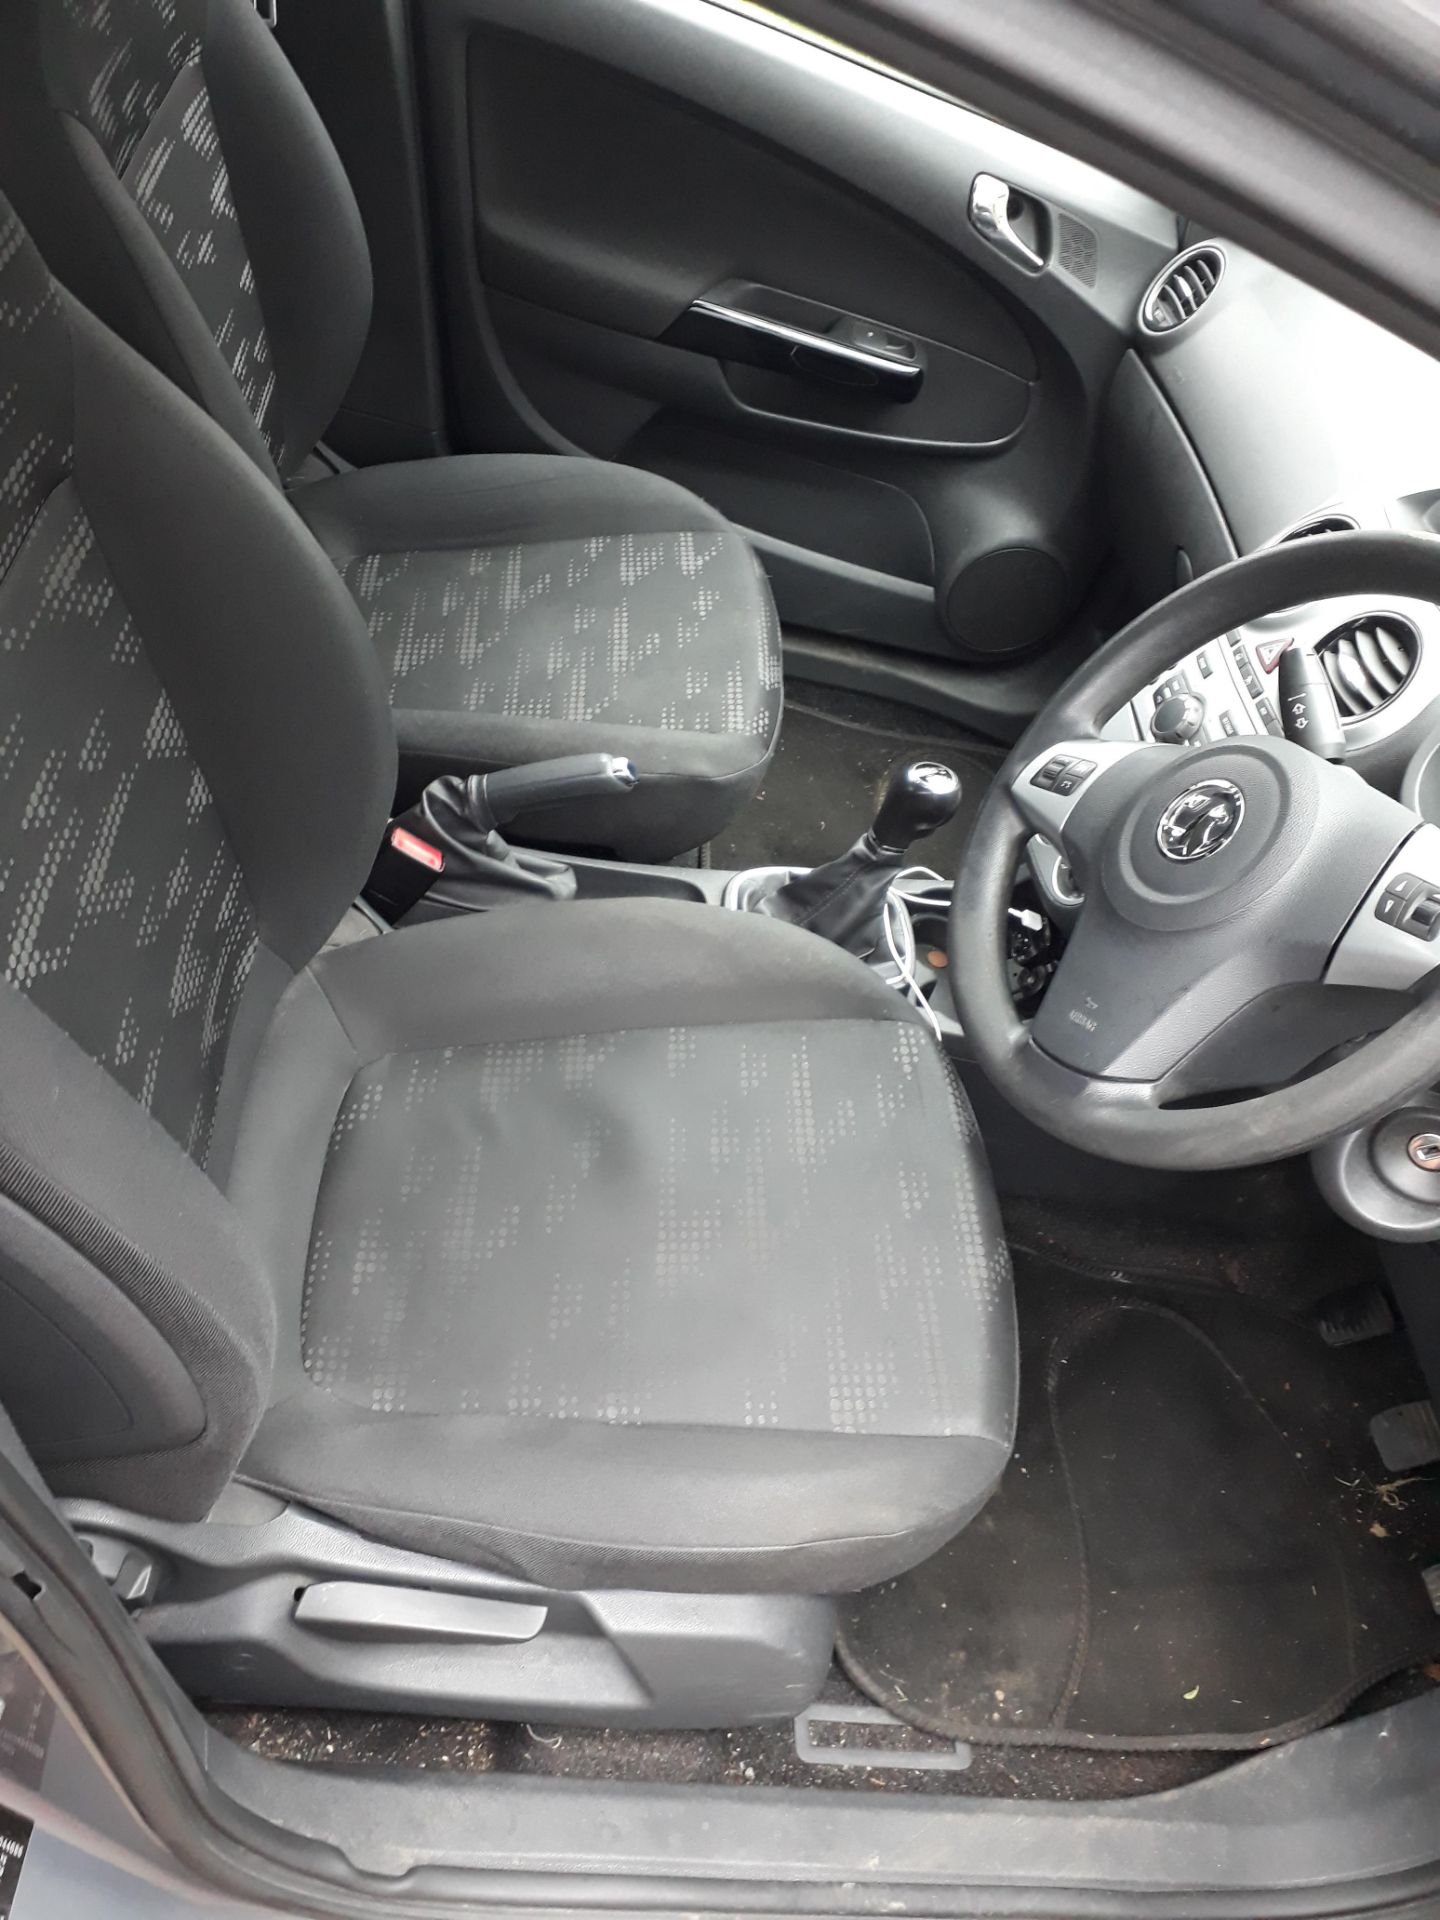 Vauxhall Corsa 1.3 deisel 5 speed manul 5 door hatchback free Road tax - Image 8 of 10